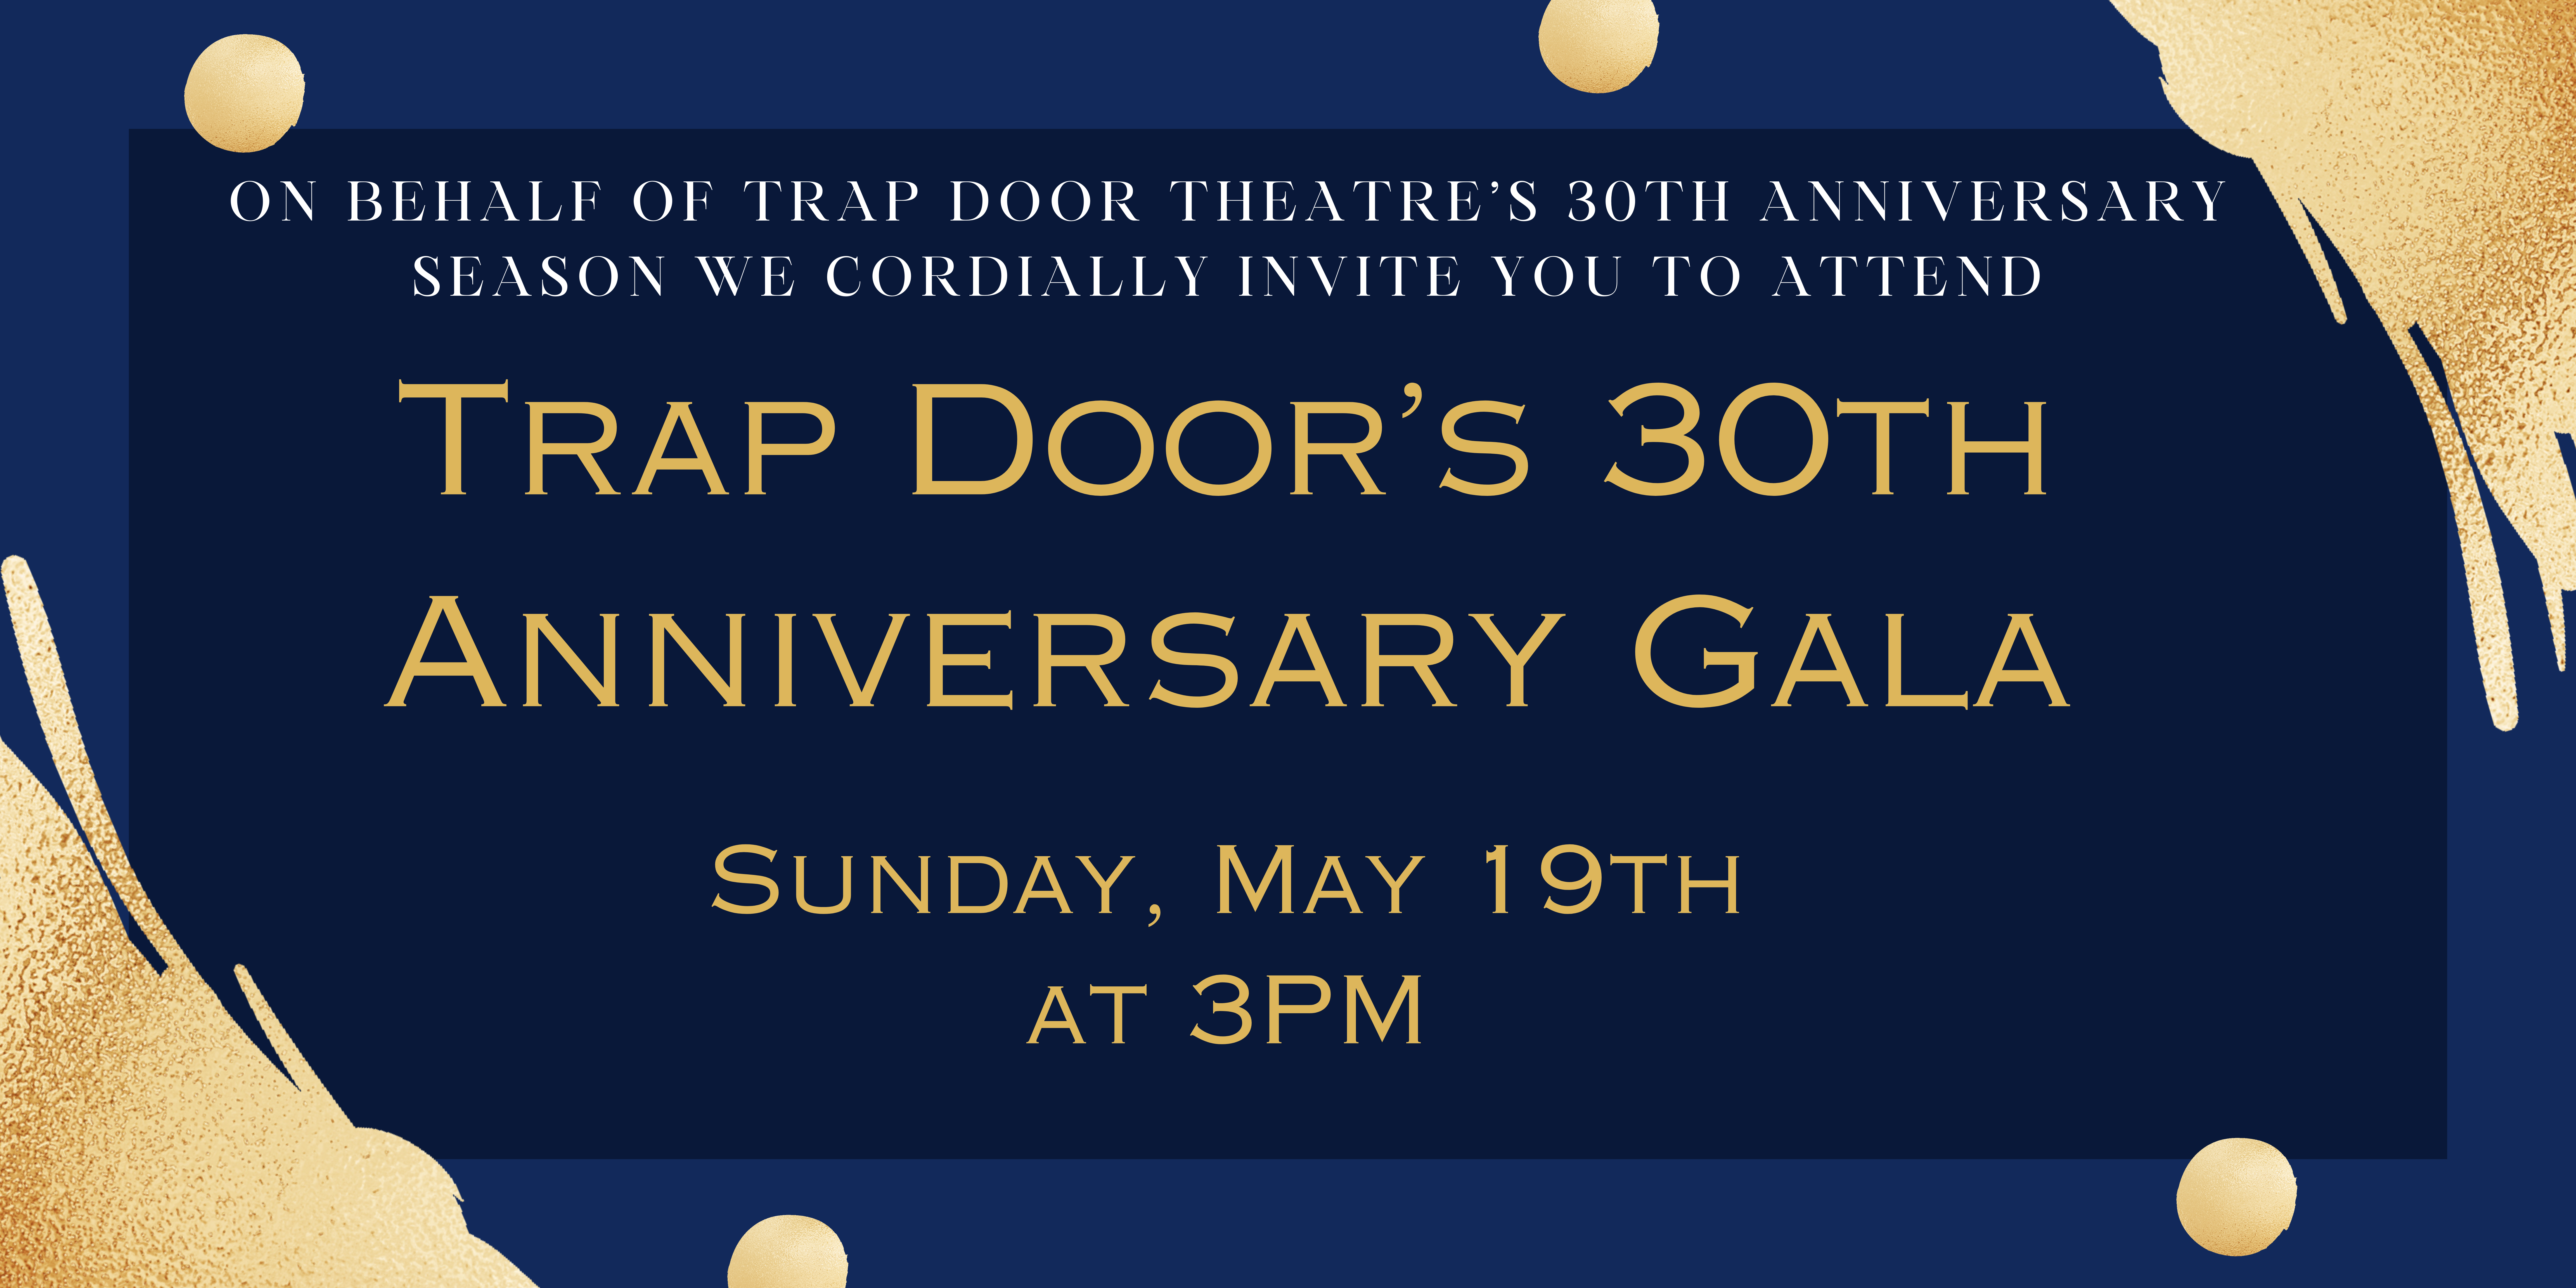 Trap Door's 30th Anniversary Gala